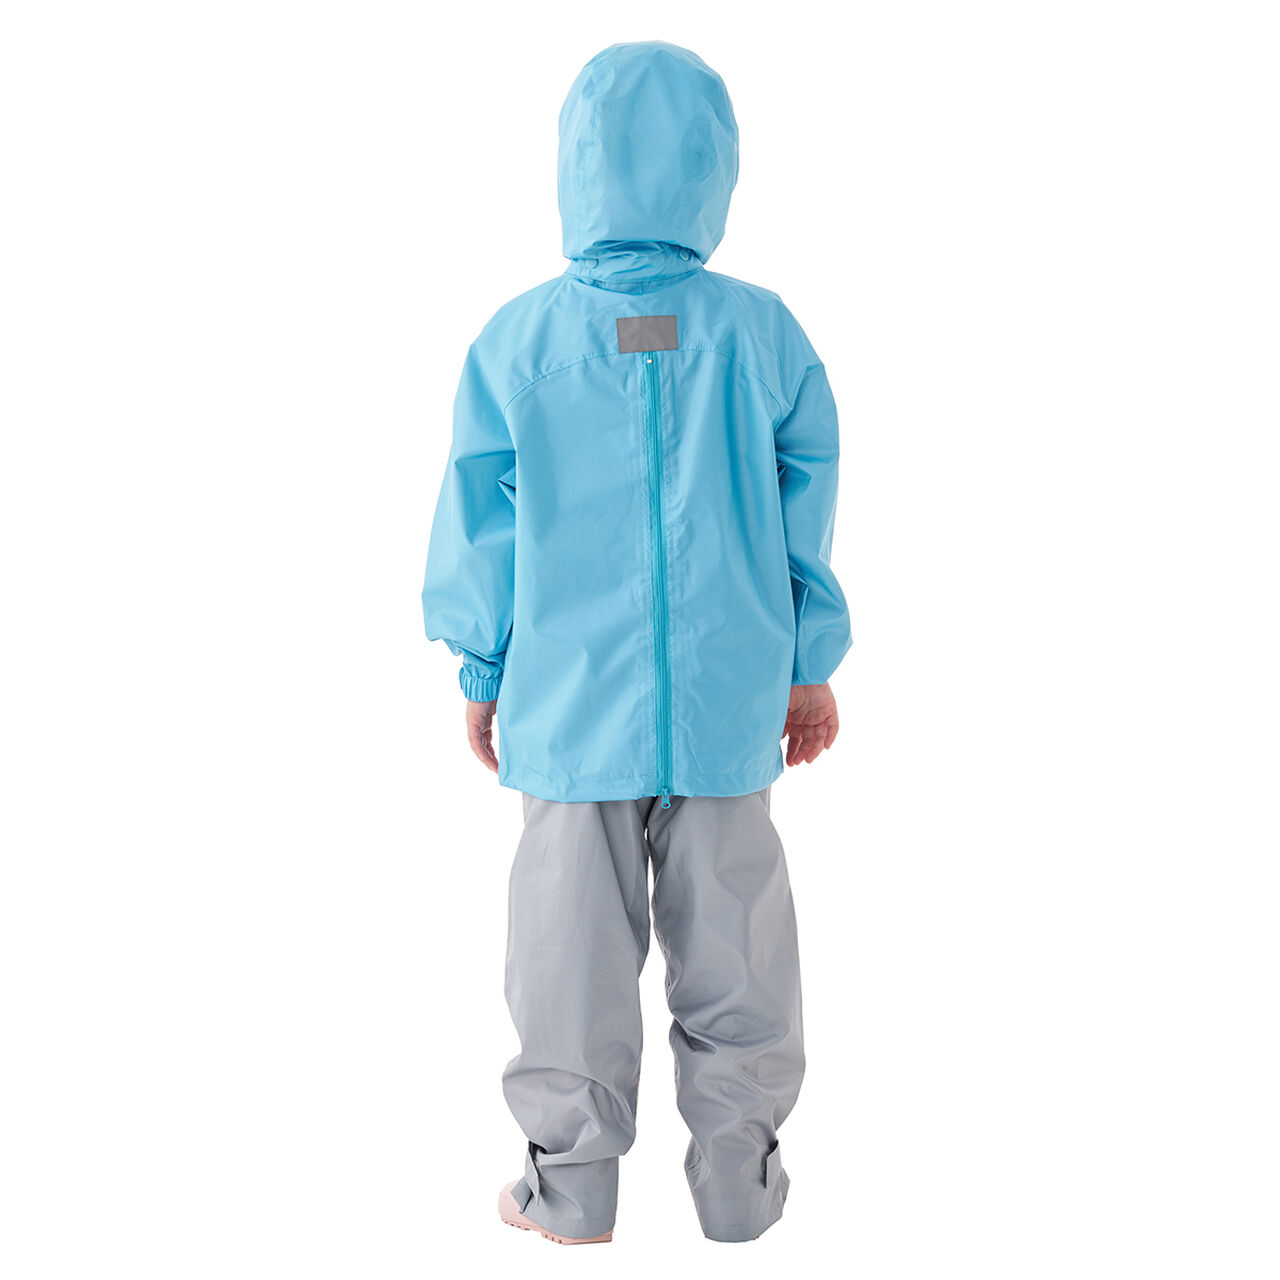 LOGOS Kids' Rain Suits,Blue, large image number 9